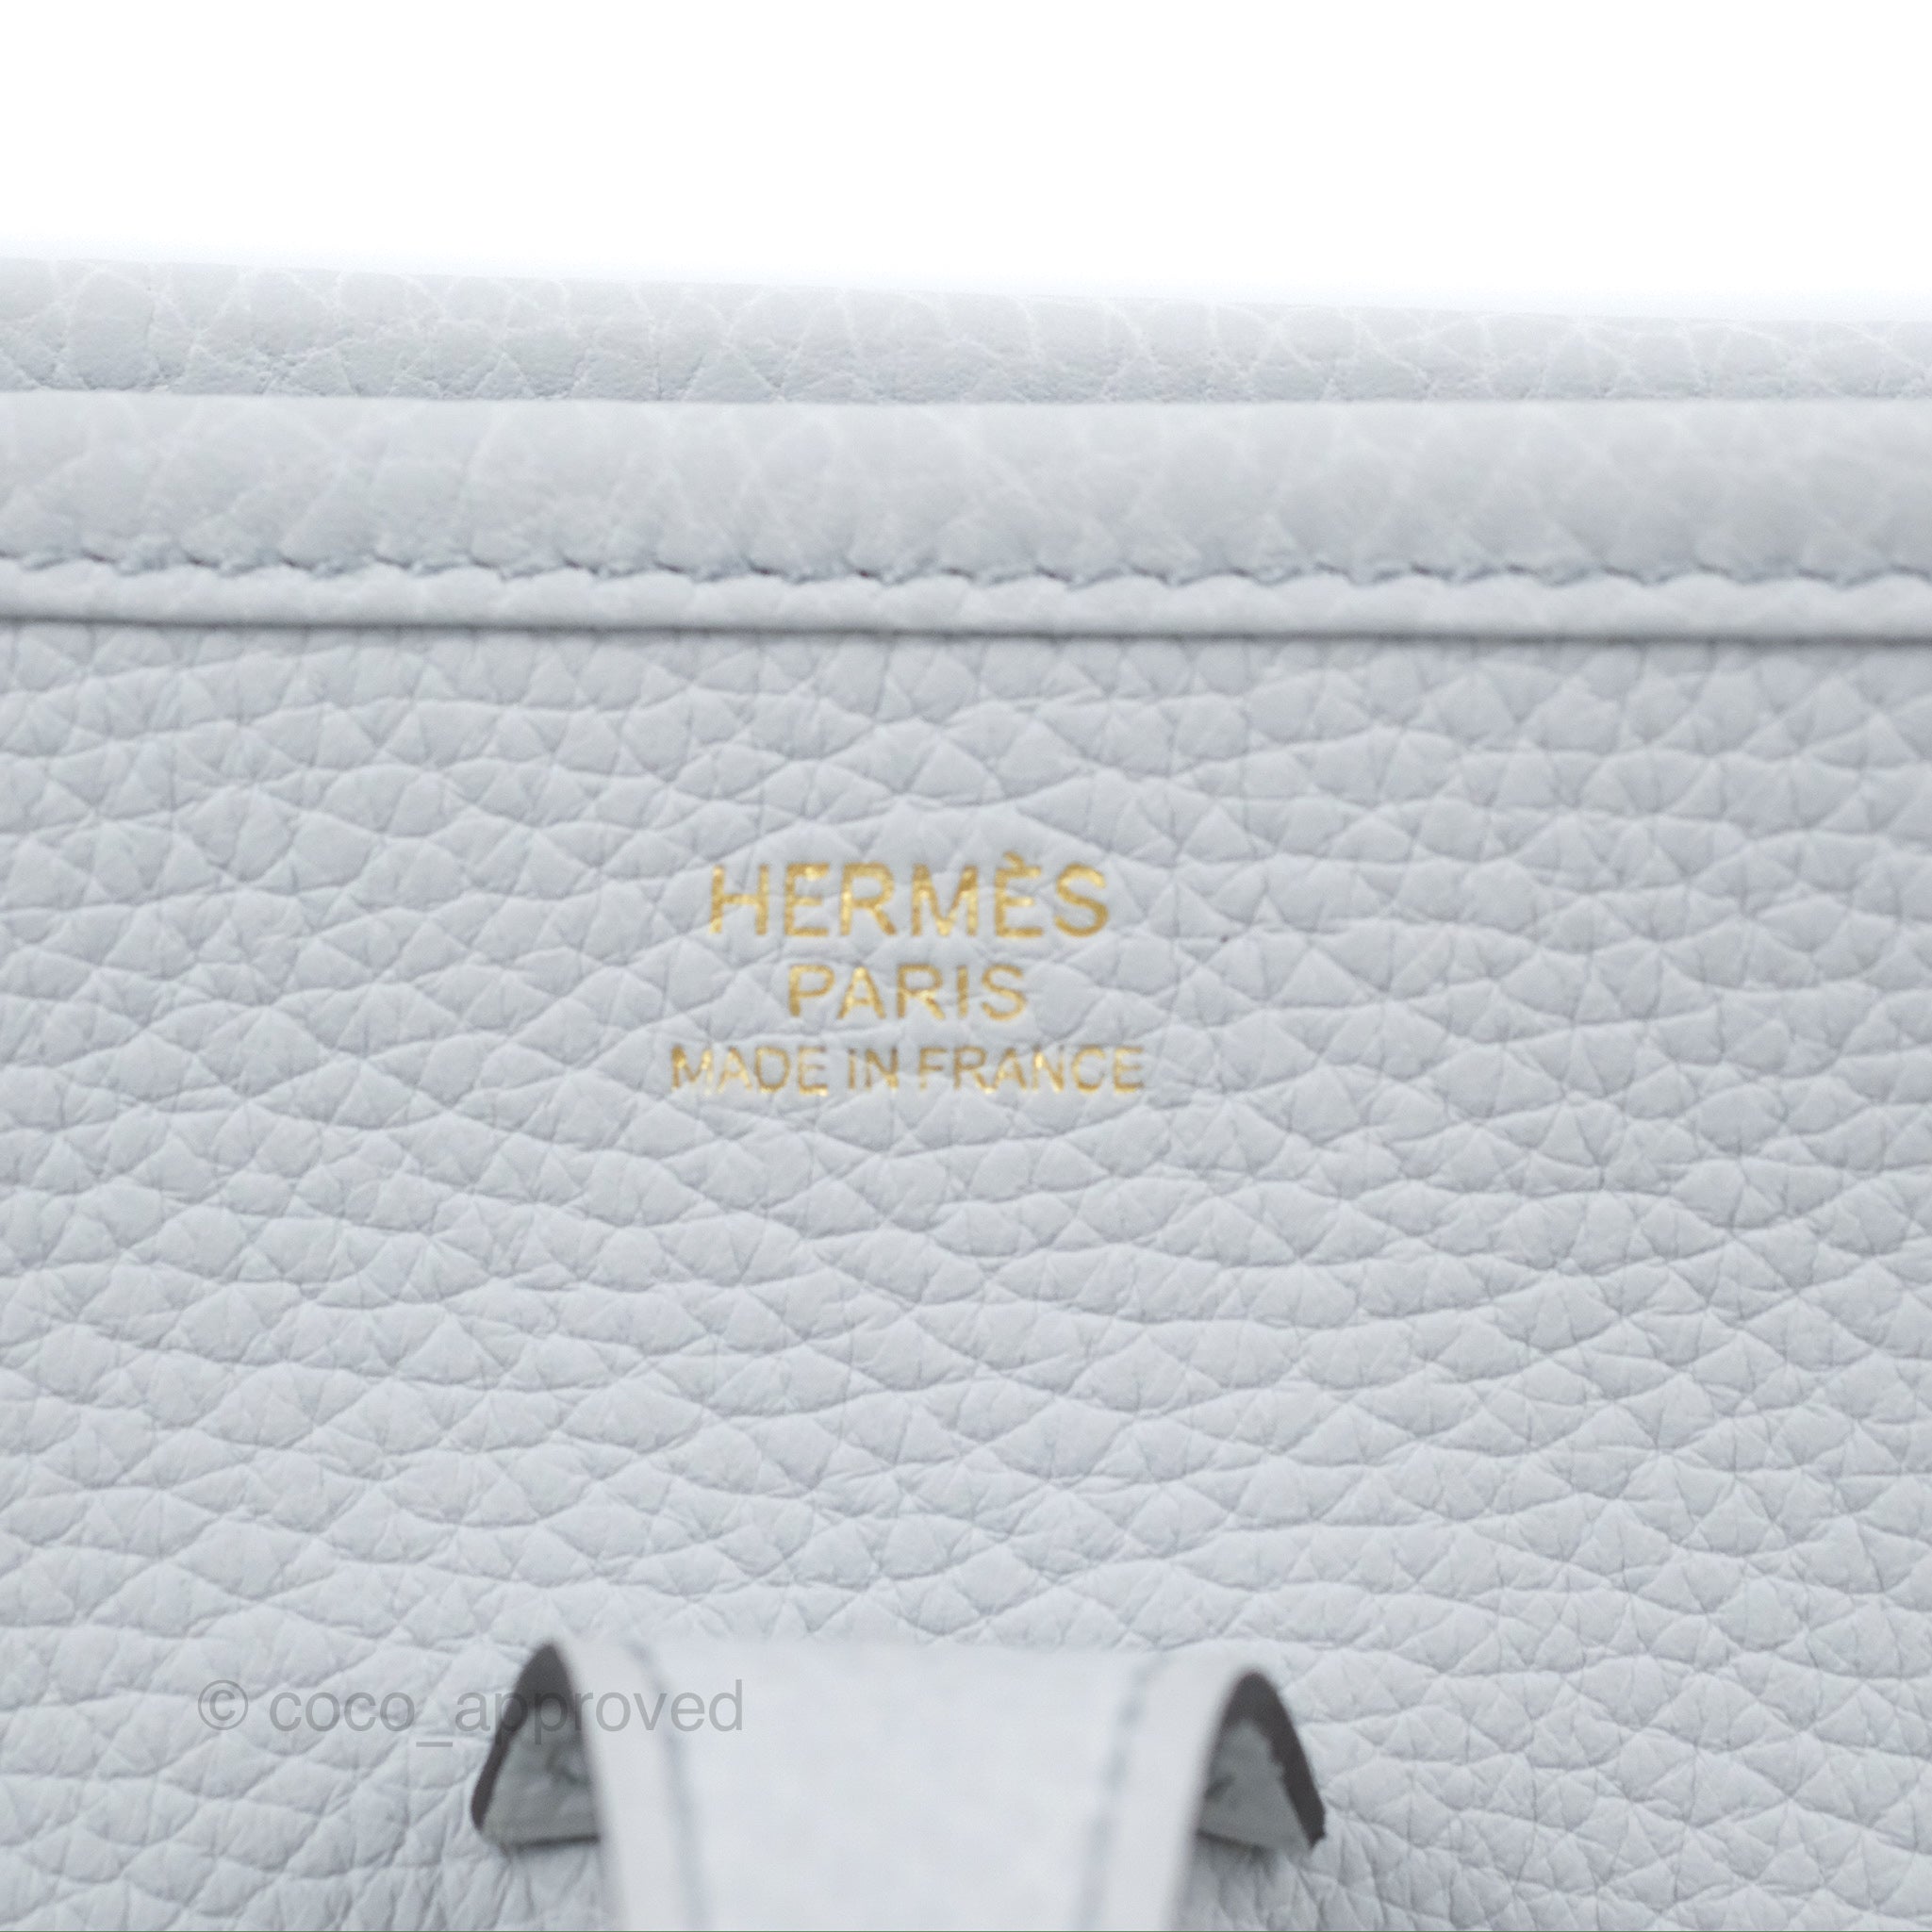 EVELYNE III 16 GOLD COLOUR IN TOGO LEATHER WITH PALLADIUM HARDWARE AND  RAINBOW STRAP. HERMÈS, 2018, Hermès Handbags, Jewellery